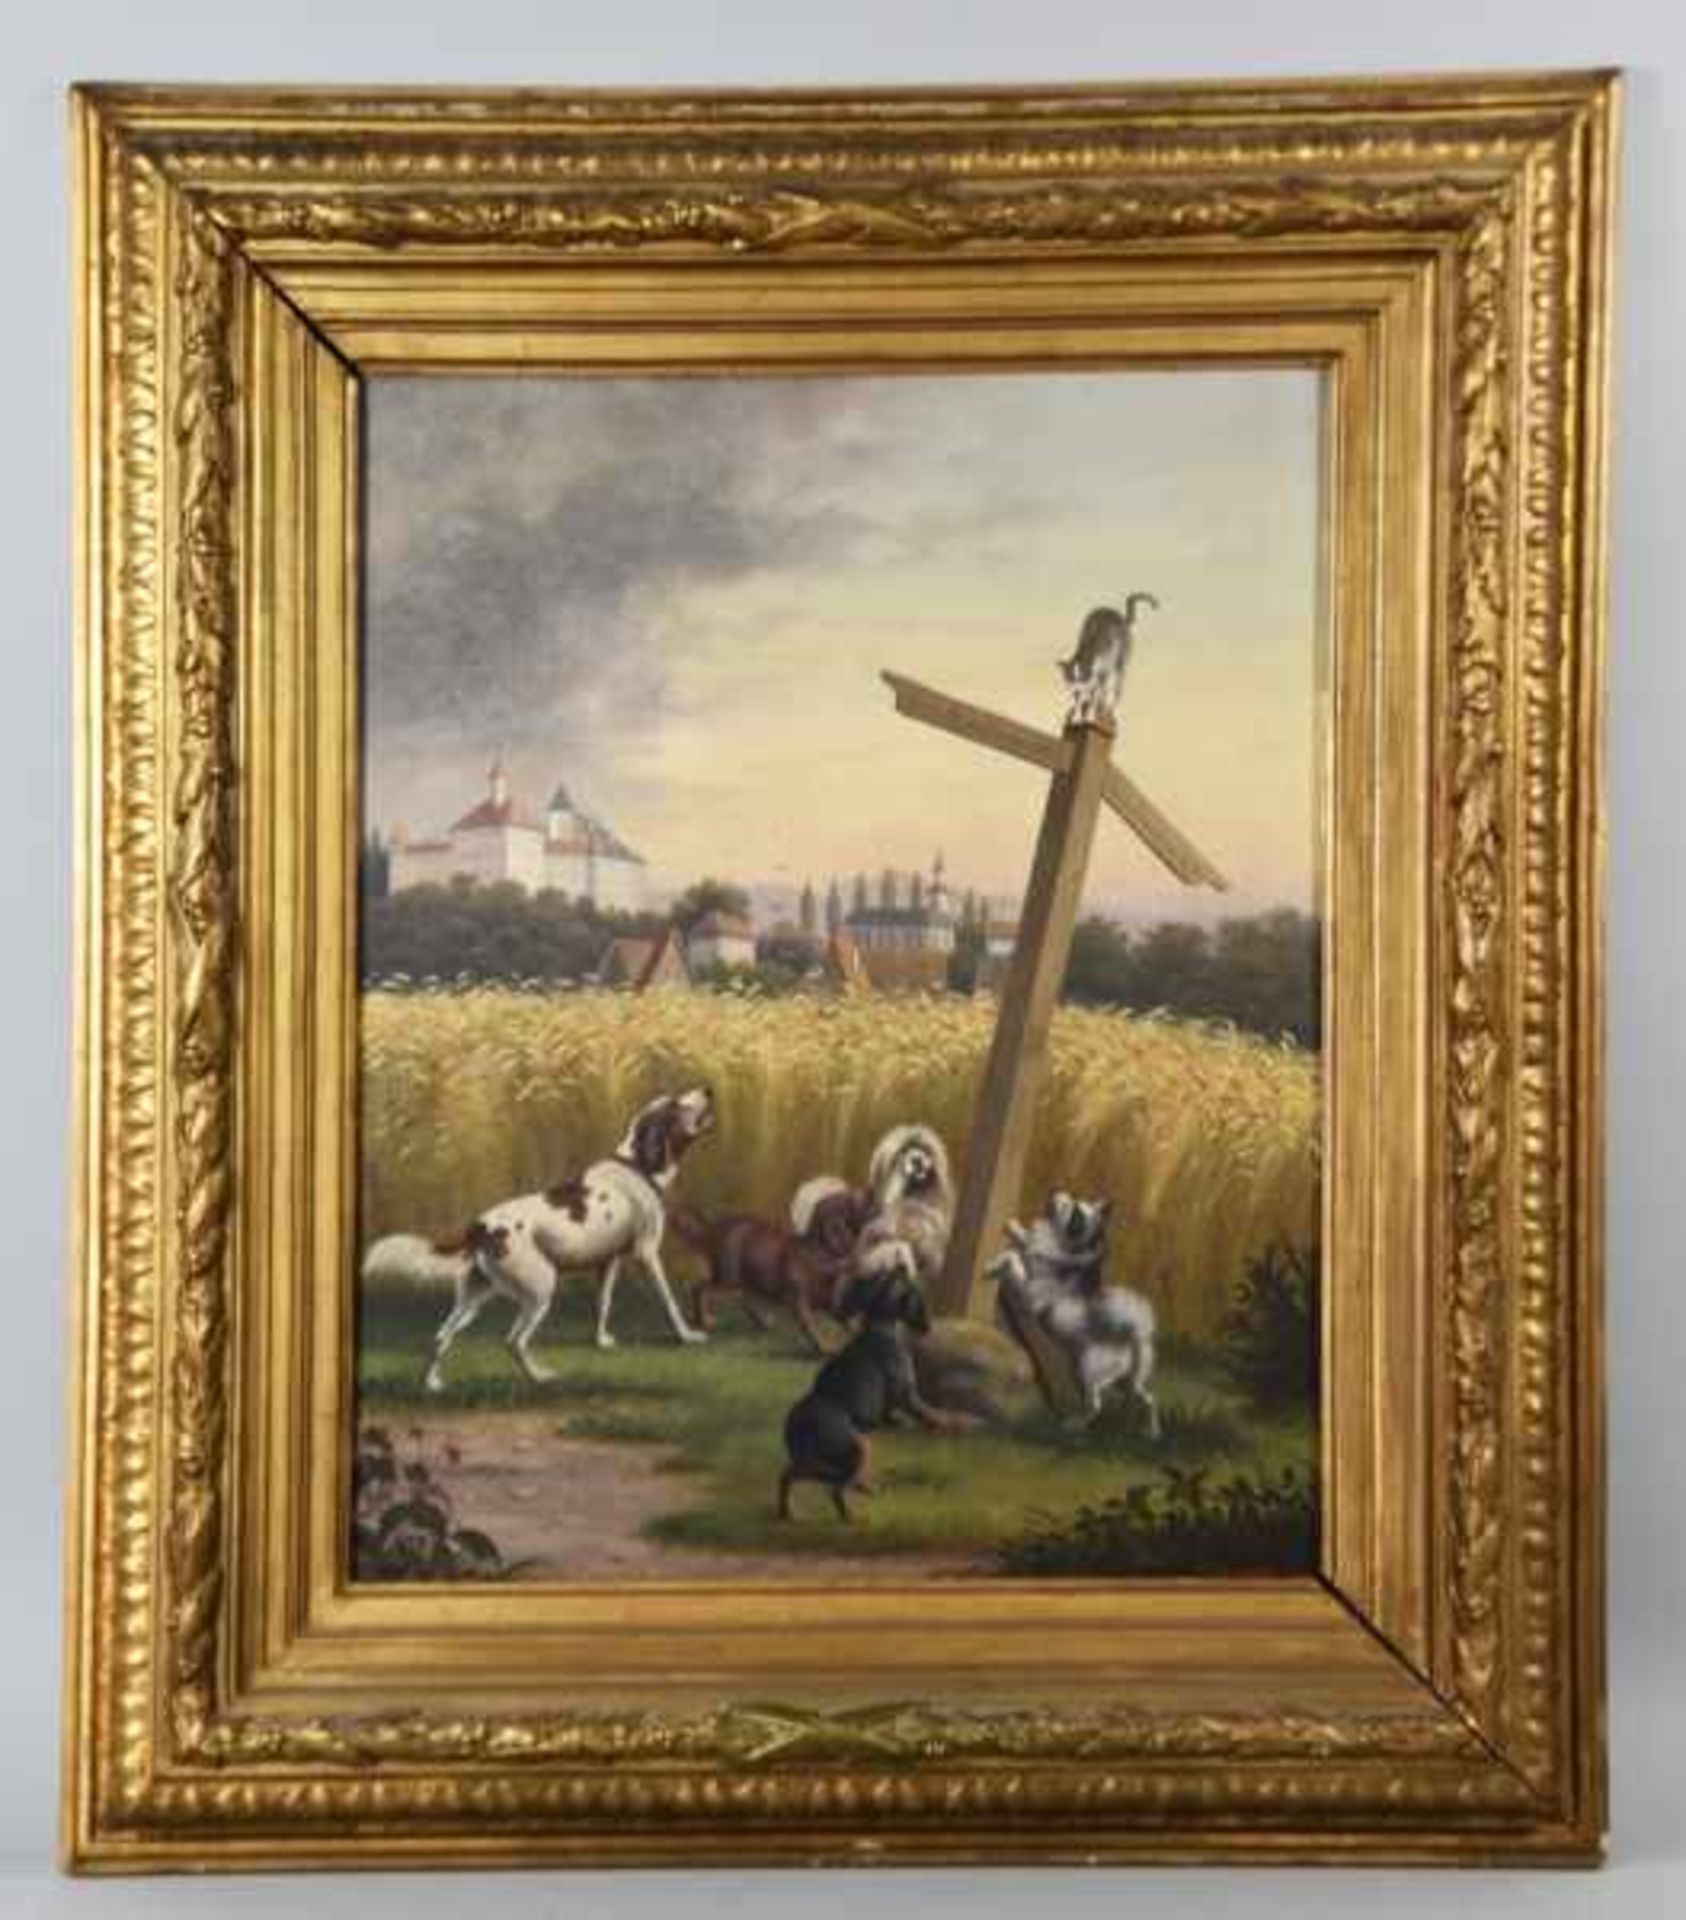 GEORGIUS Robert (1871 - 1942 Deutschland) "Hunde am Wegkreuz", 5 Hunde bellend vor einem Wegkreuz - Bild 2 aus 3